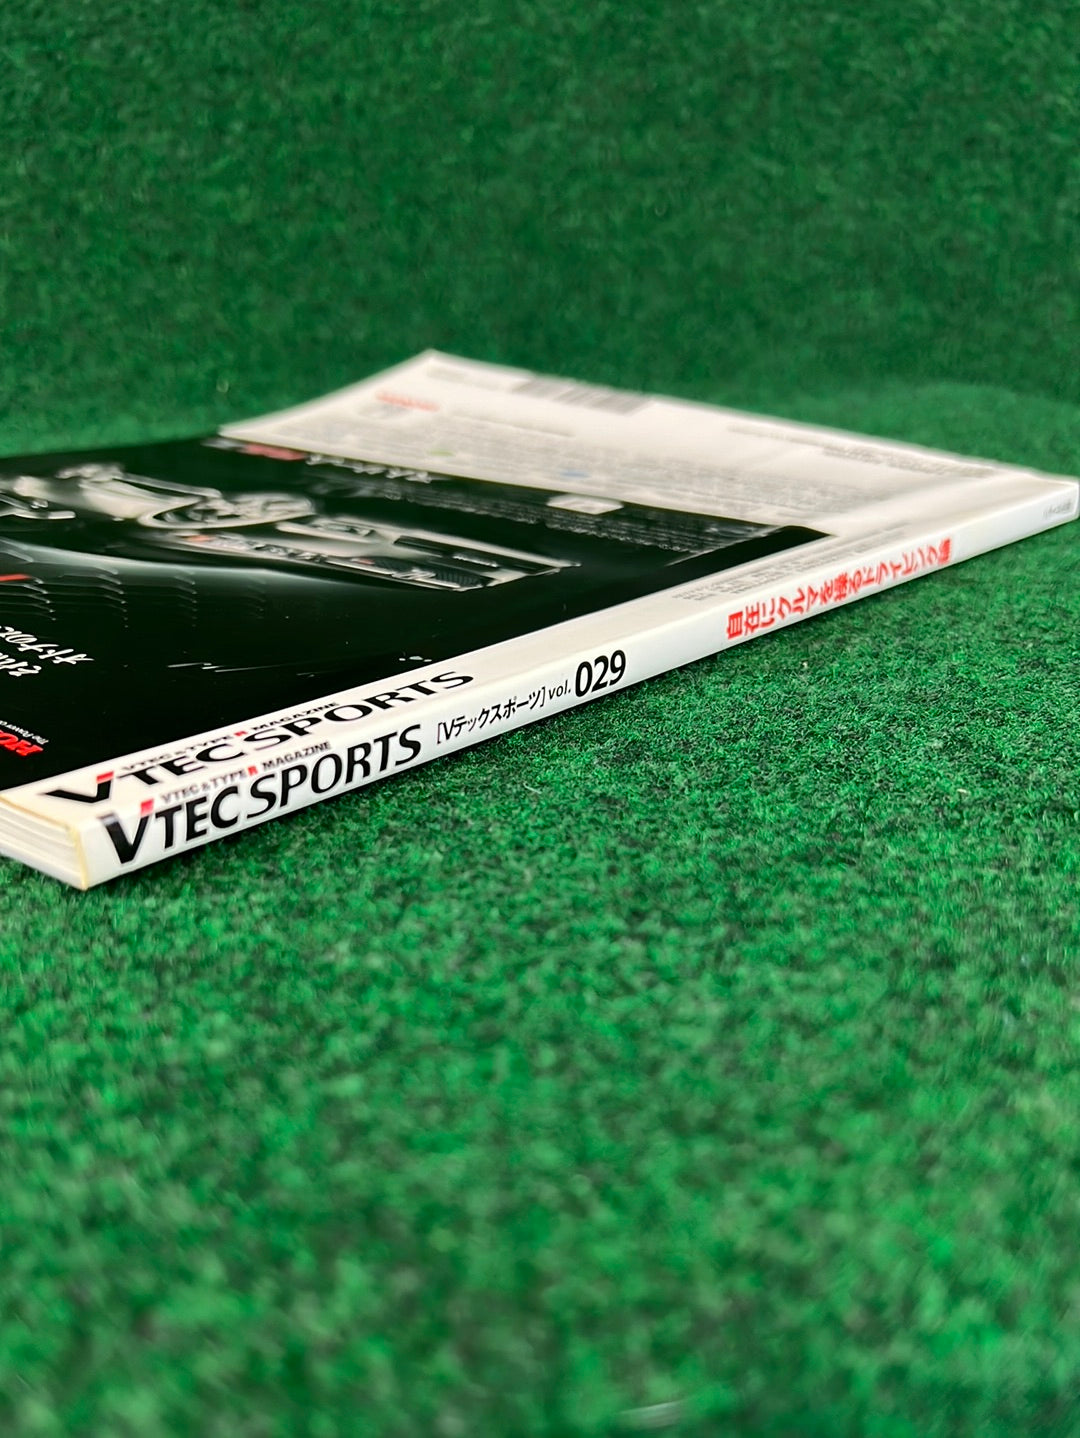 VTEC SPORTS Magazine - Vol. 029